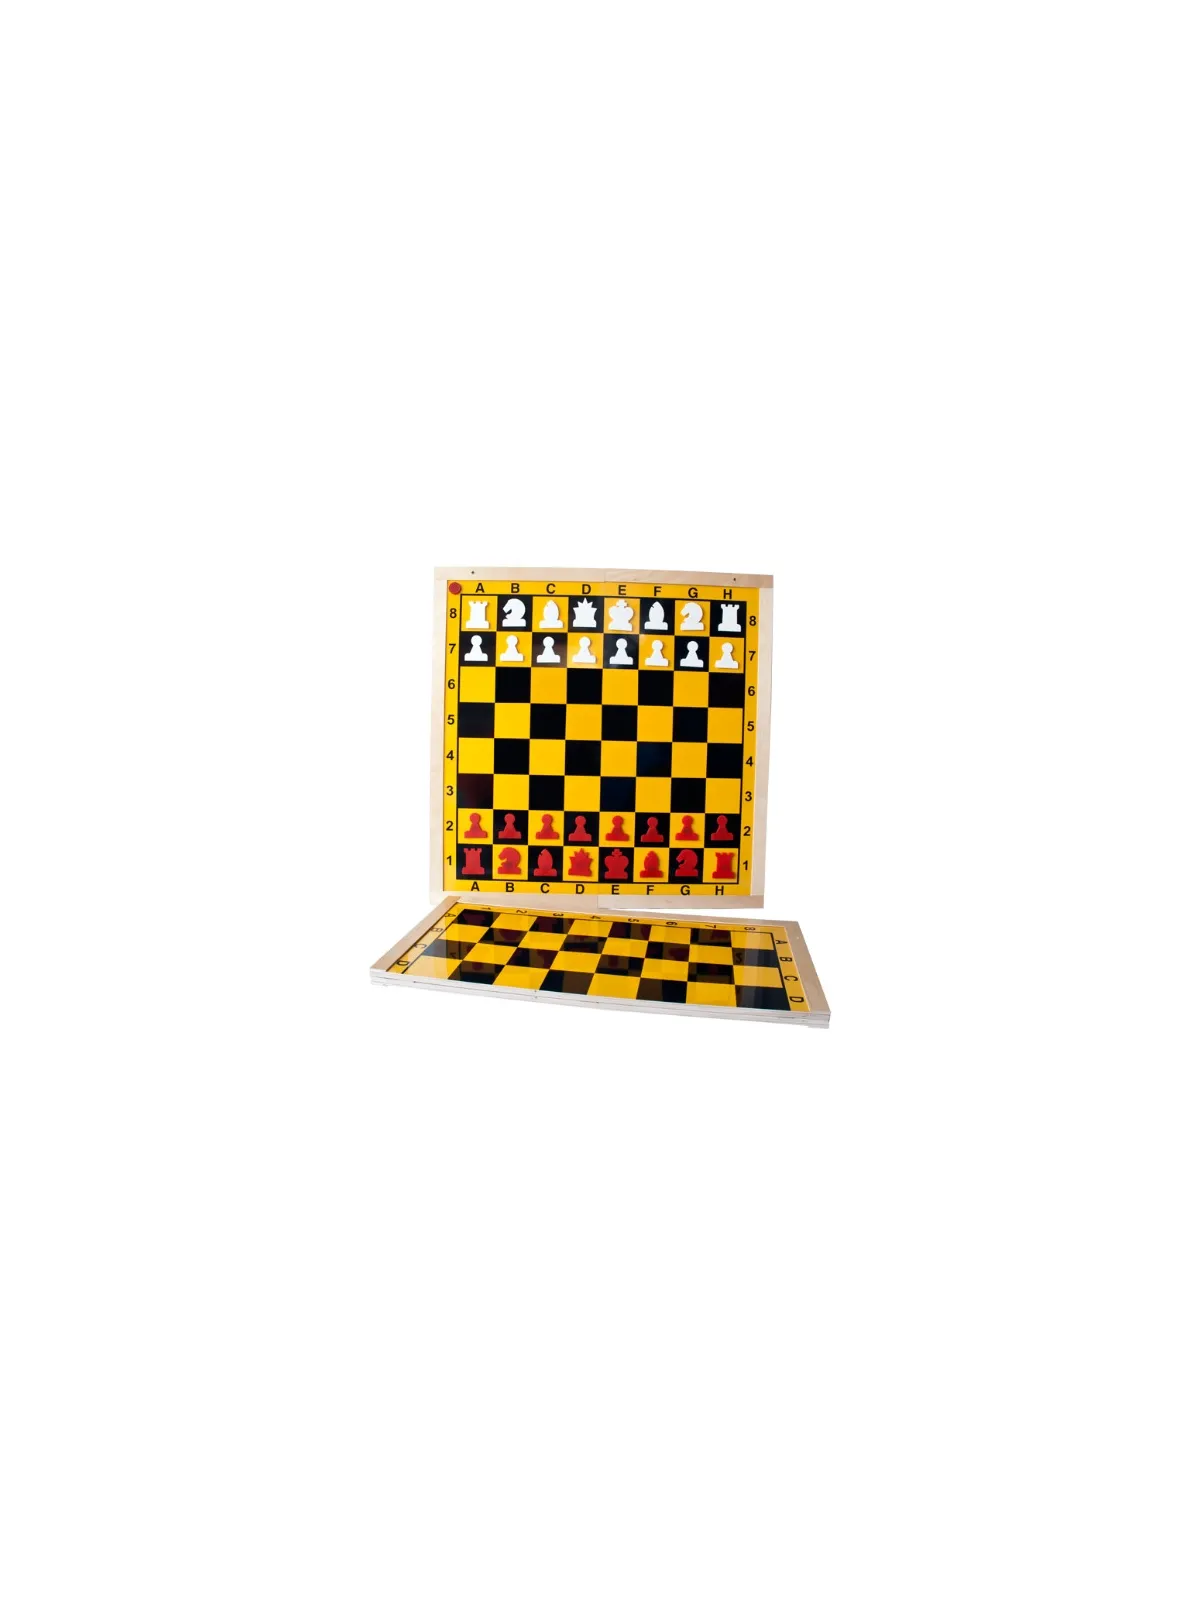 Chessboard Demonstration